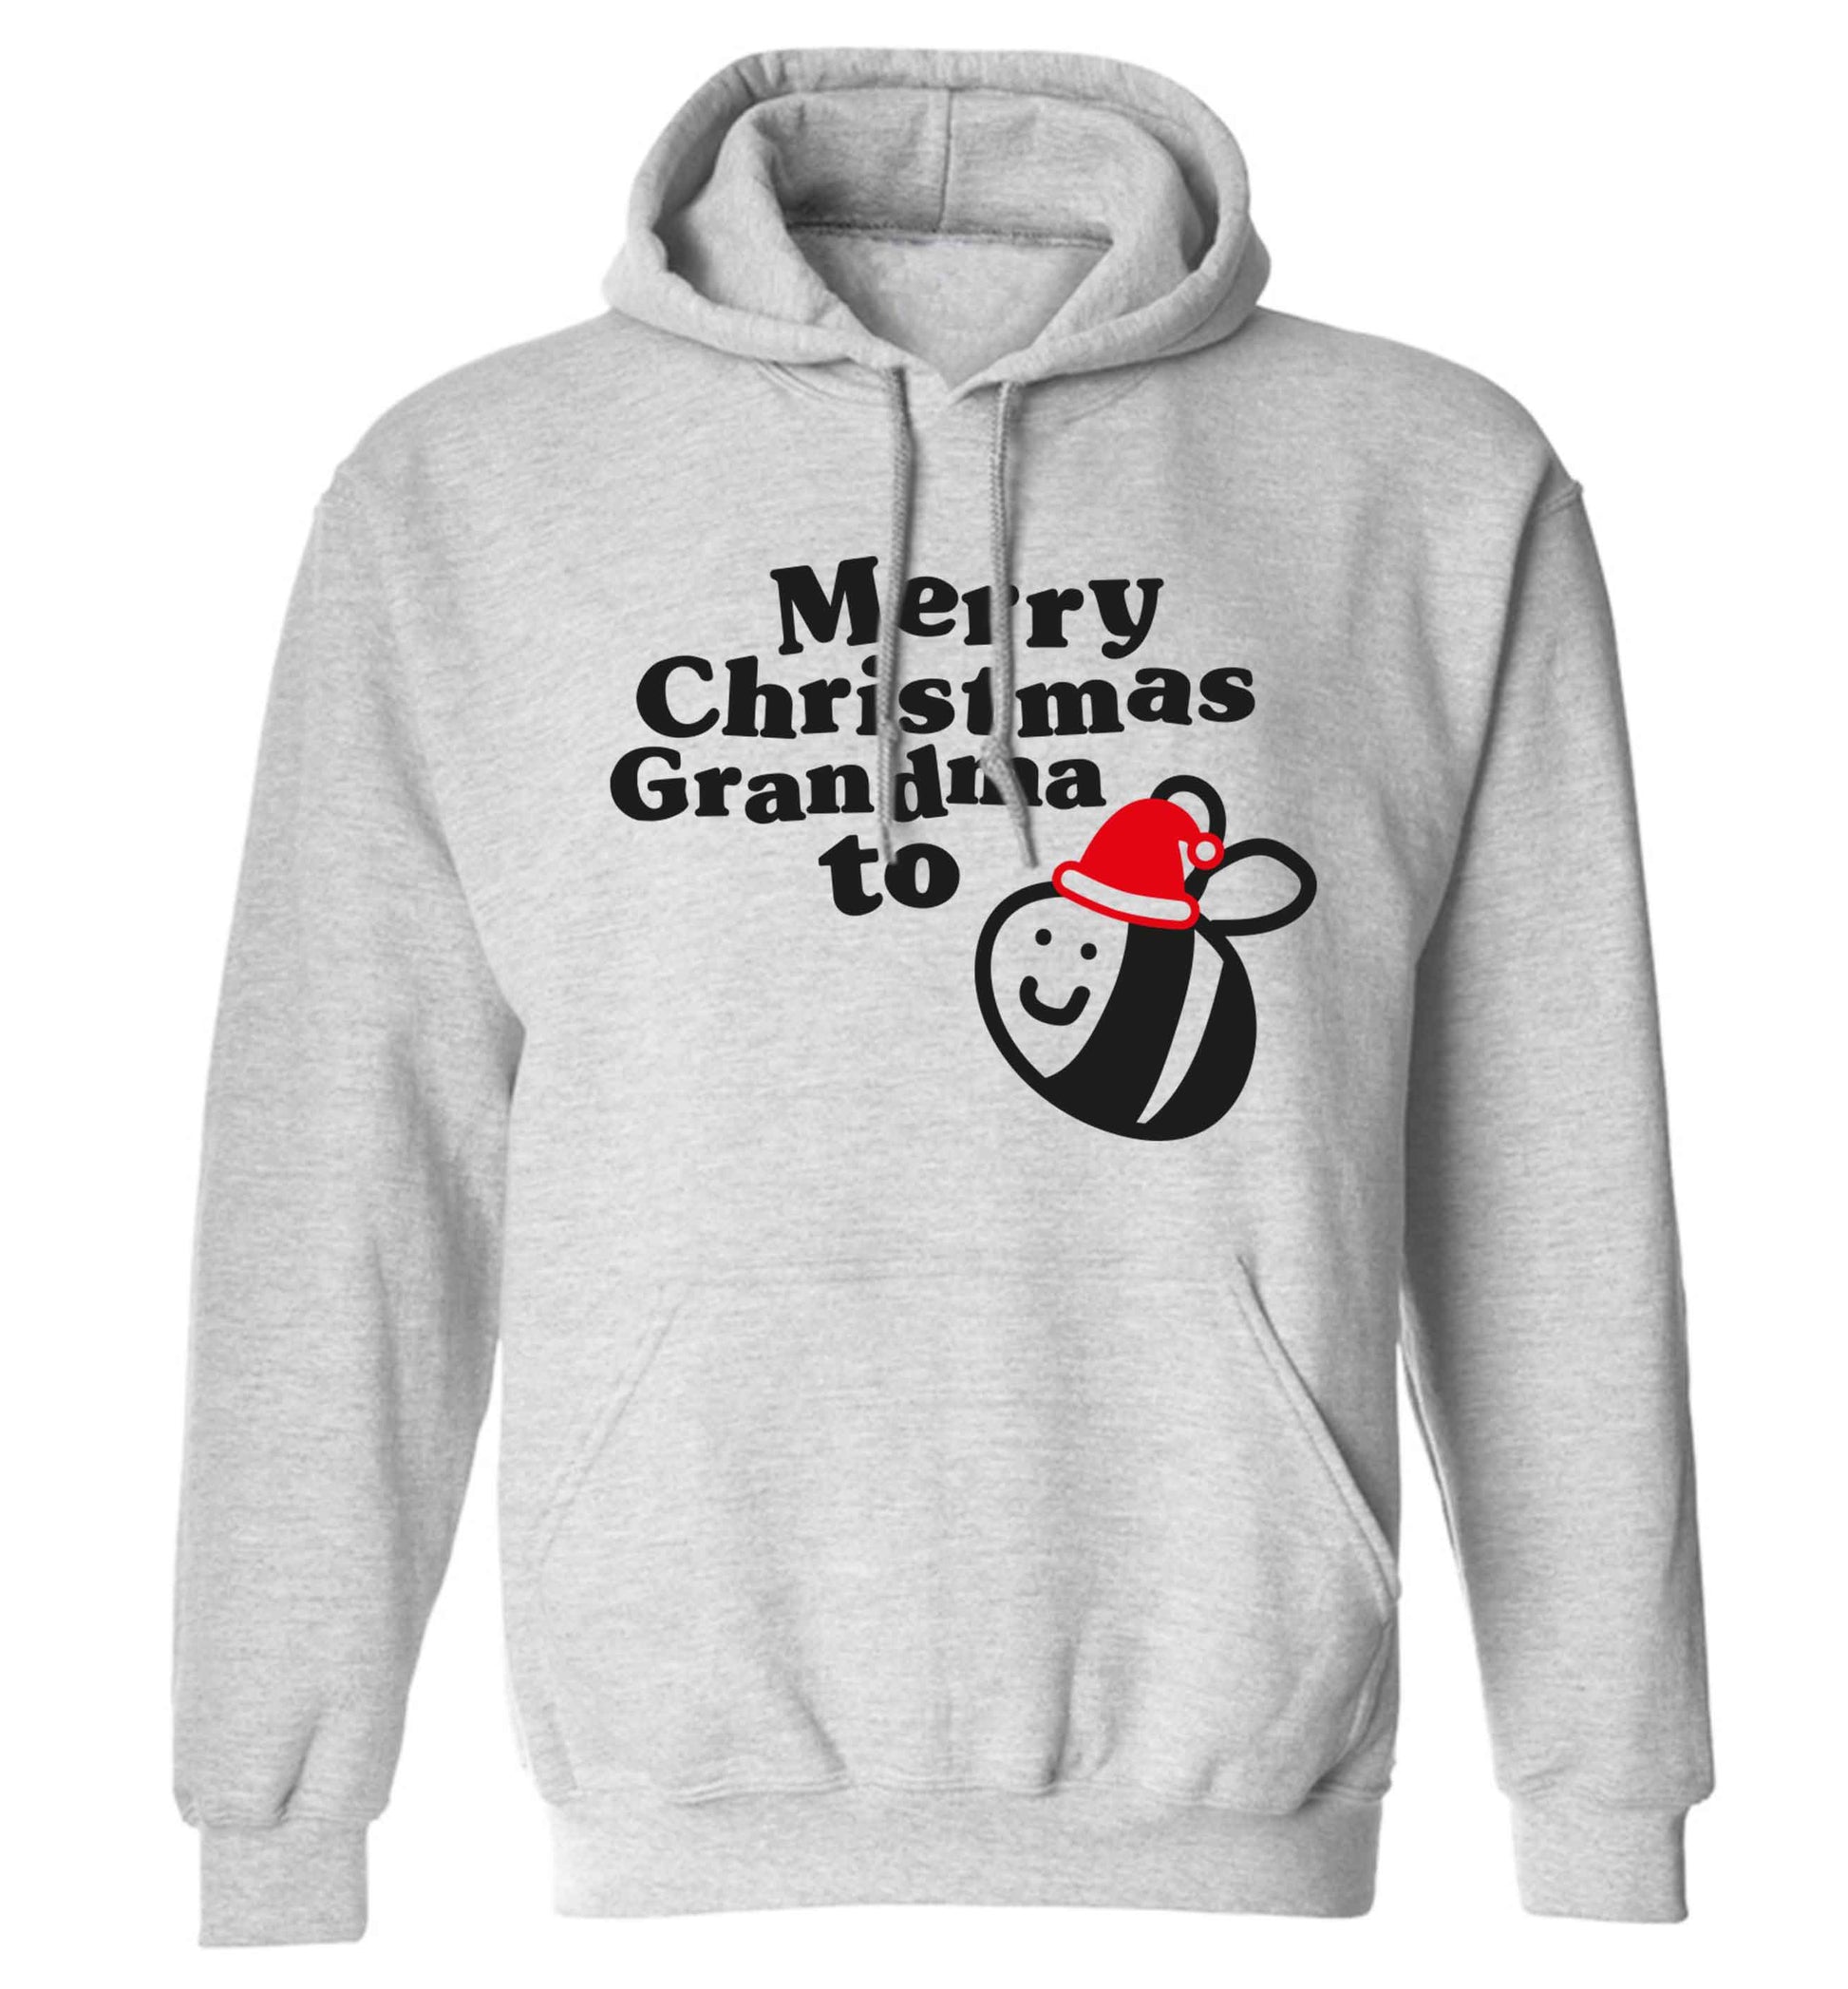 Merry Christmas grandma to be adults unisex grey hoodie 2XL